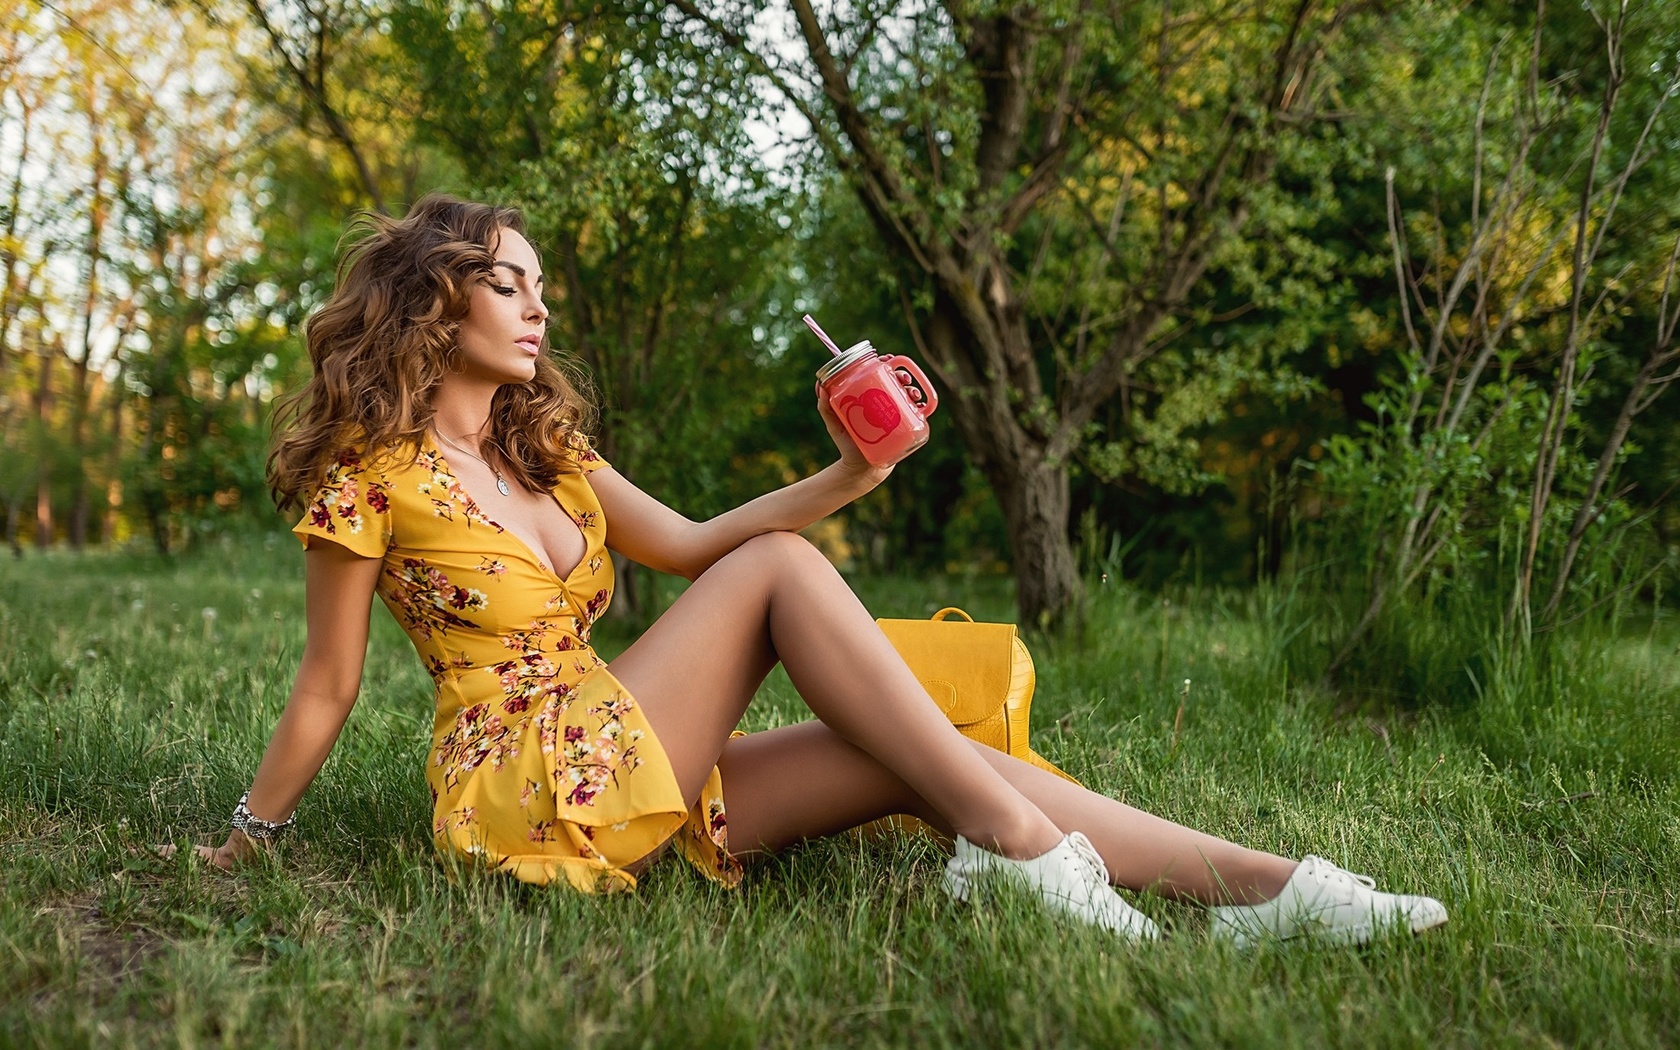 women, yellow dress, trees, tanned, portrait, women outdoors, sneakers, pink lipstick, grass, sitting